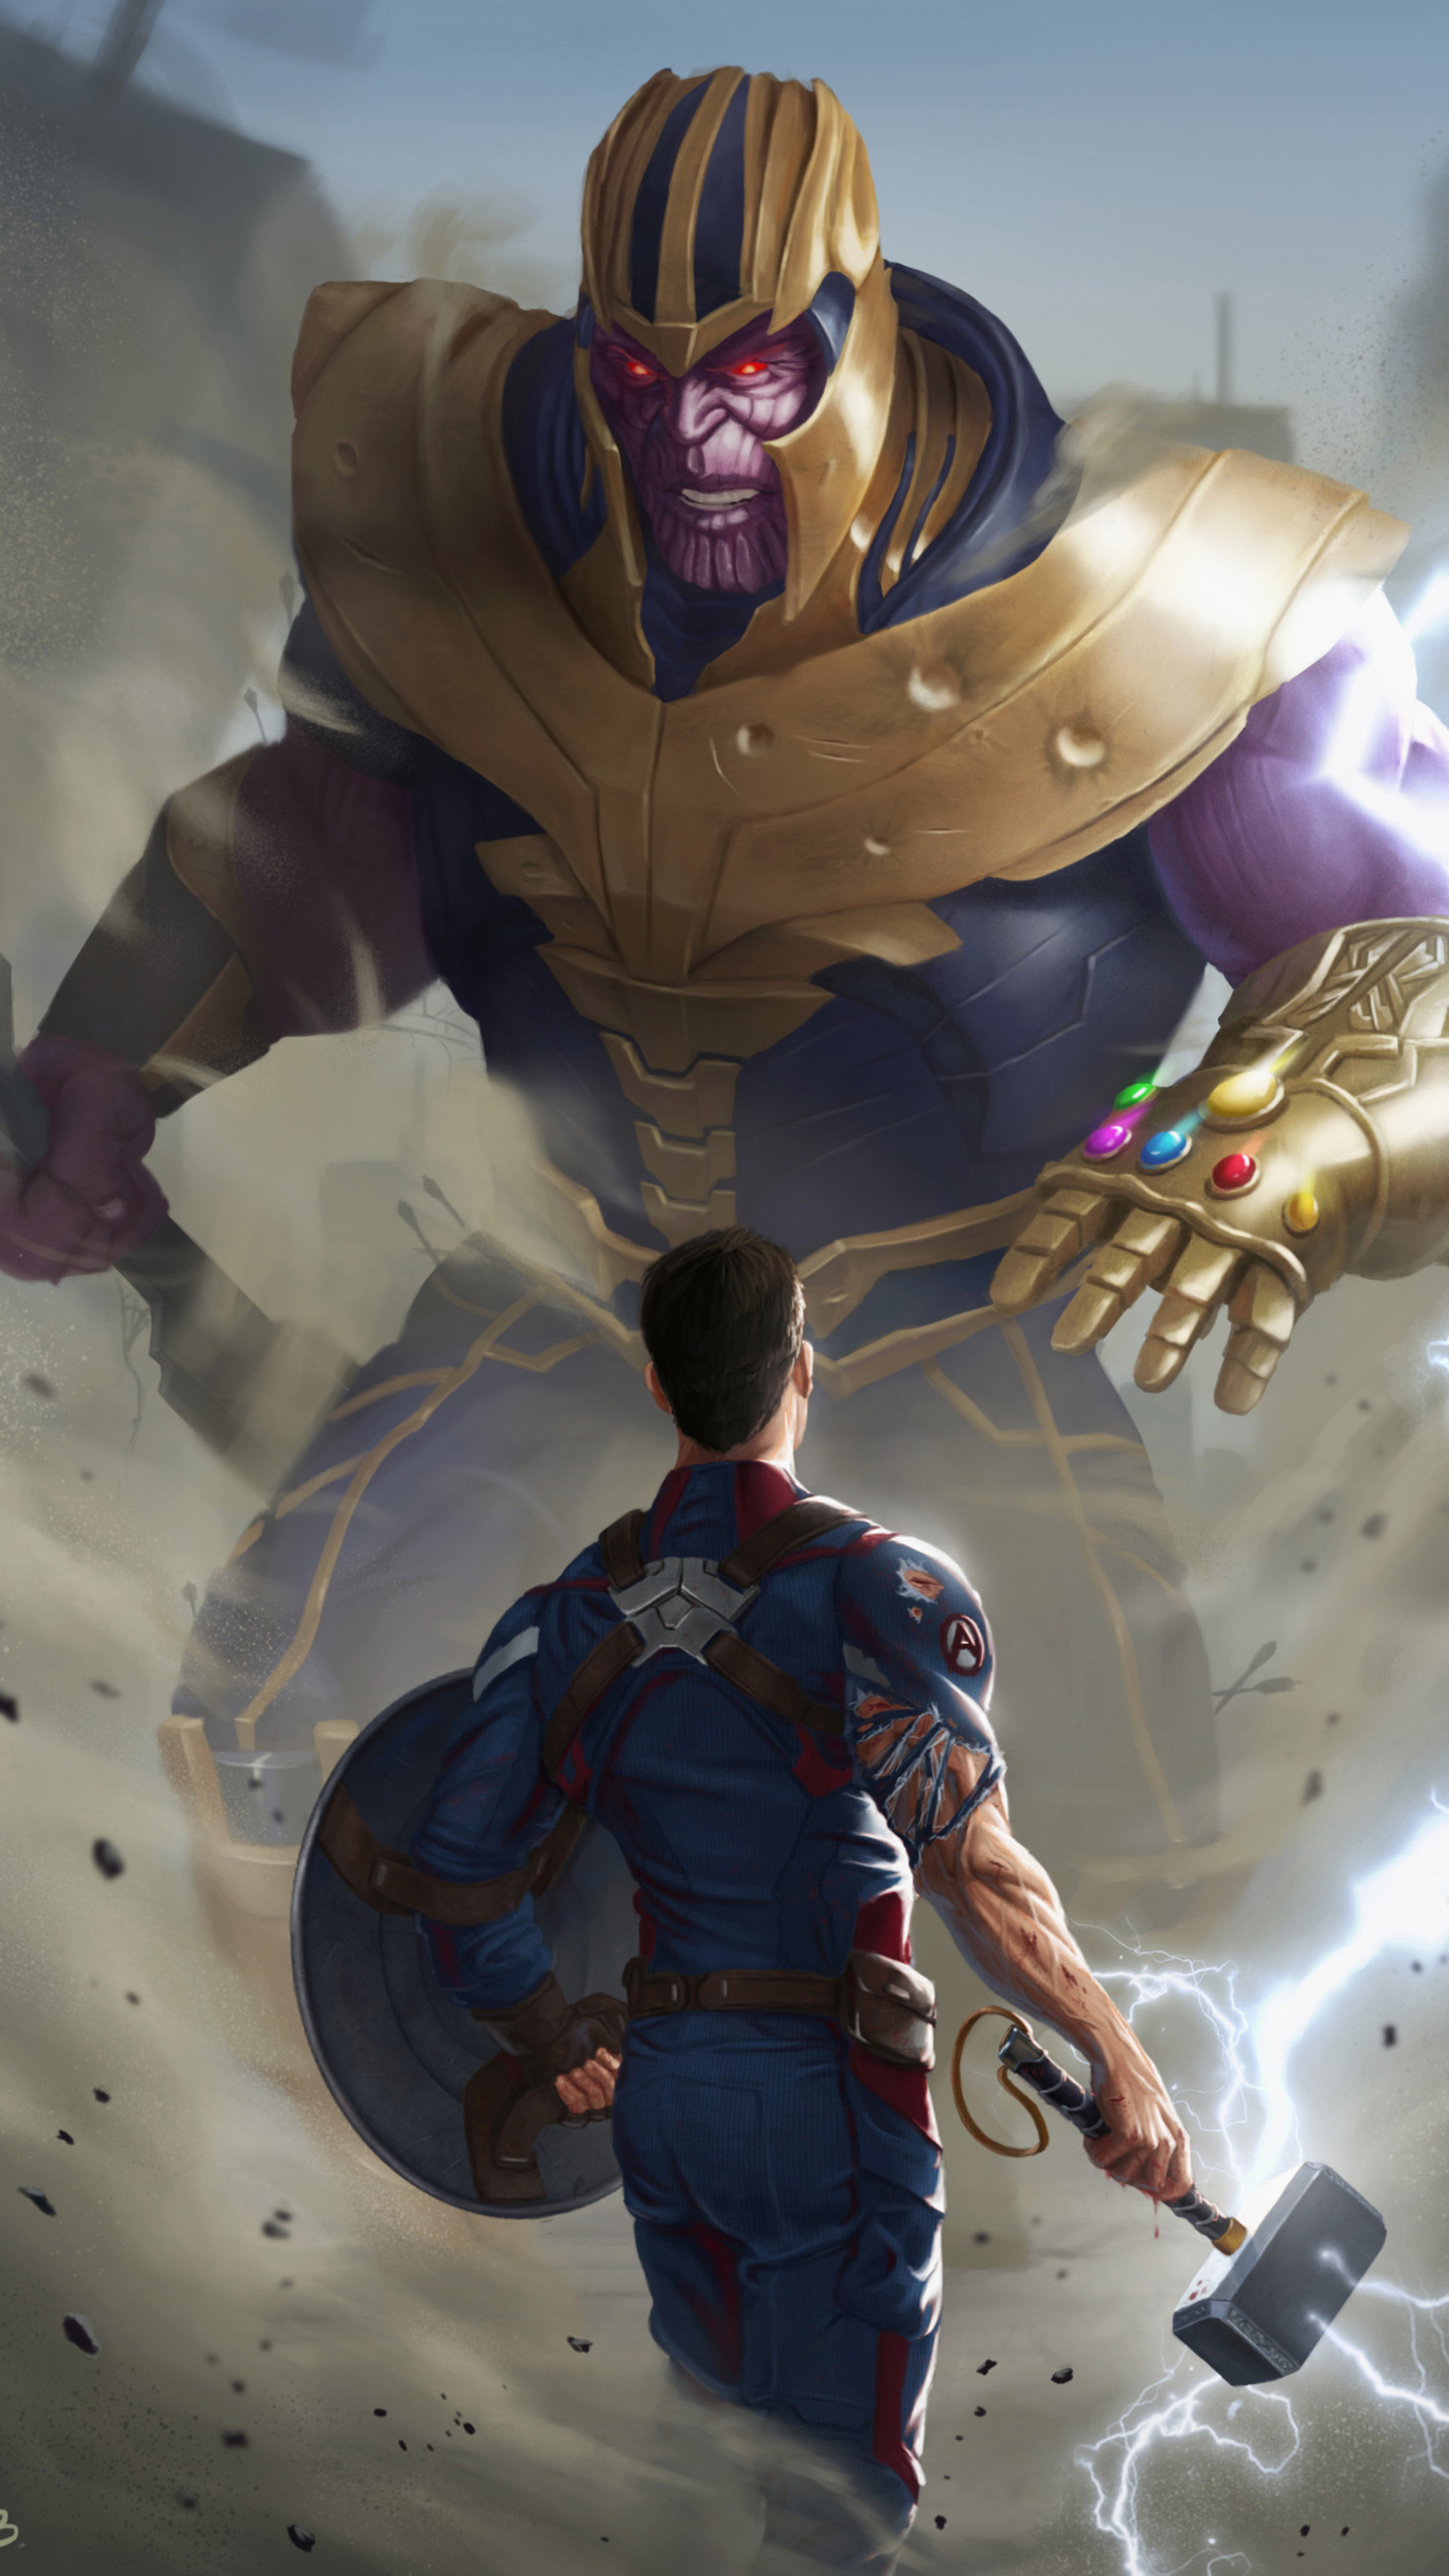 Captain America With Thor Hammer Sony Xperia X, XZ, Z5